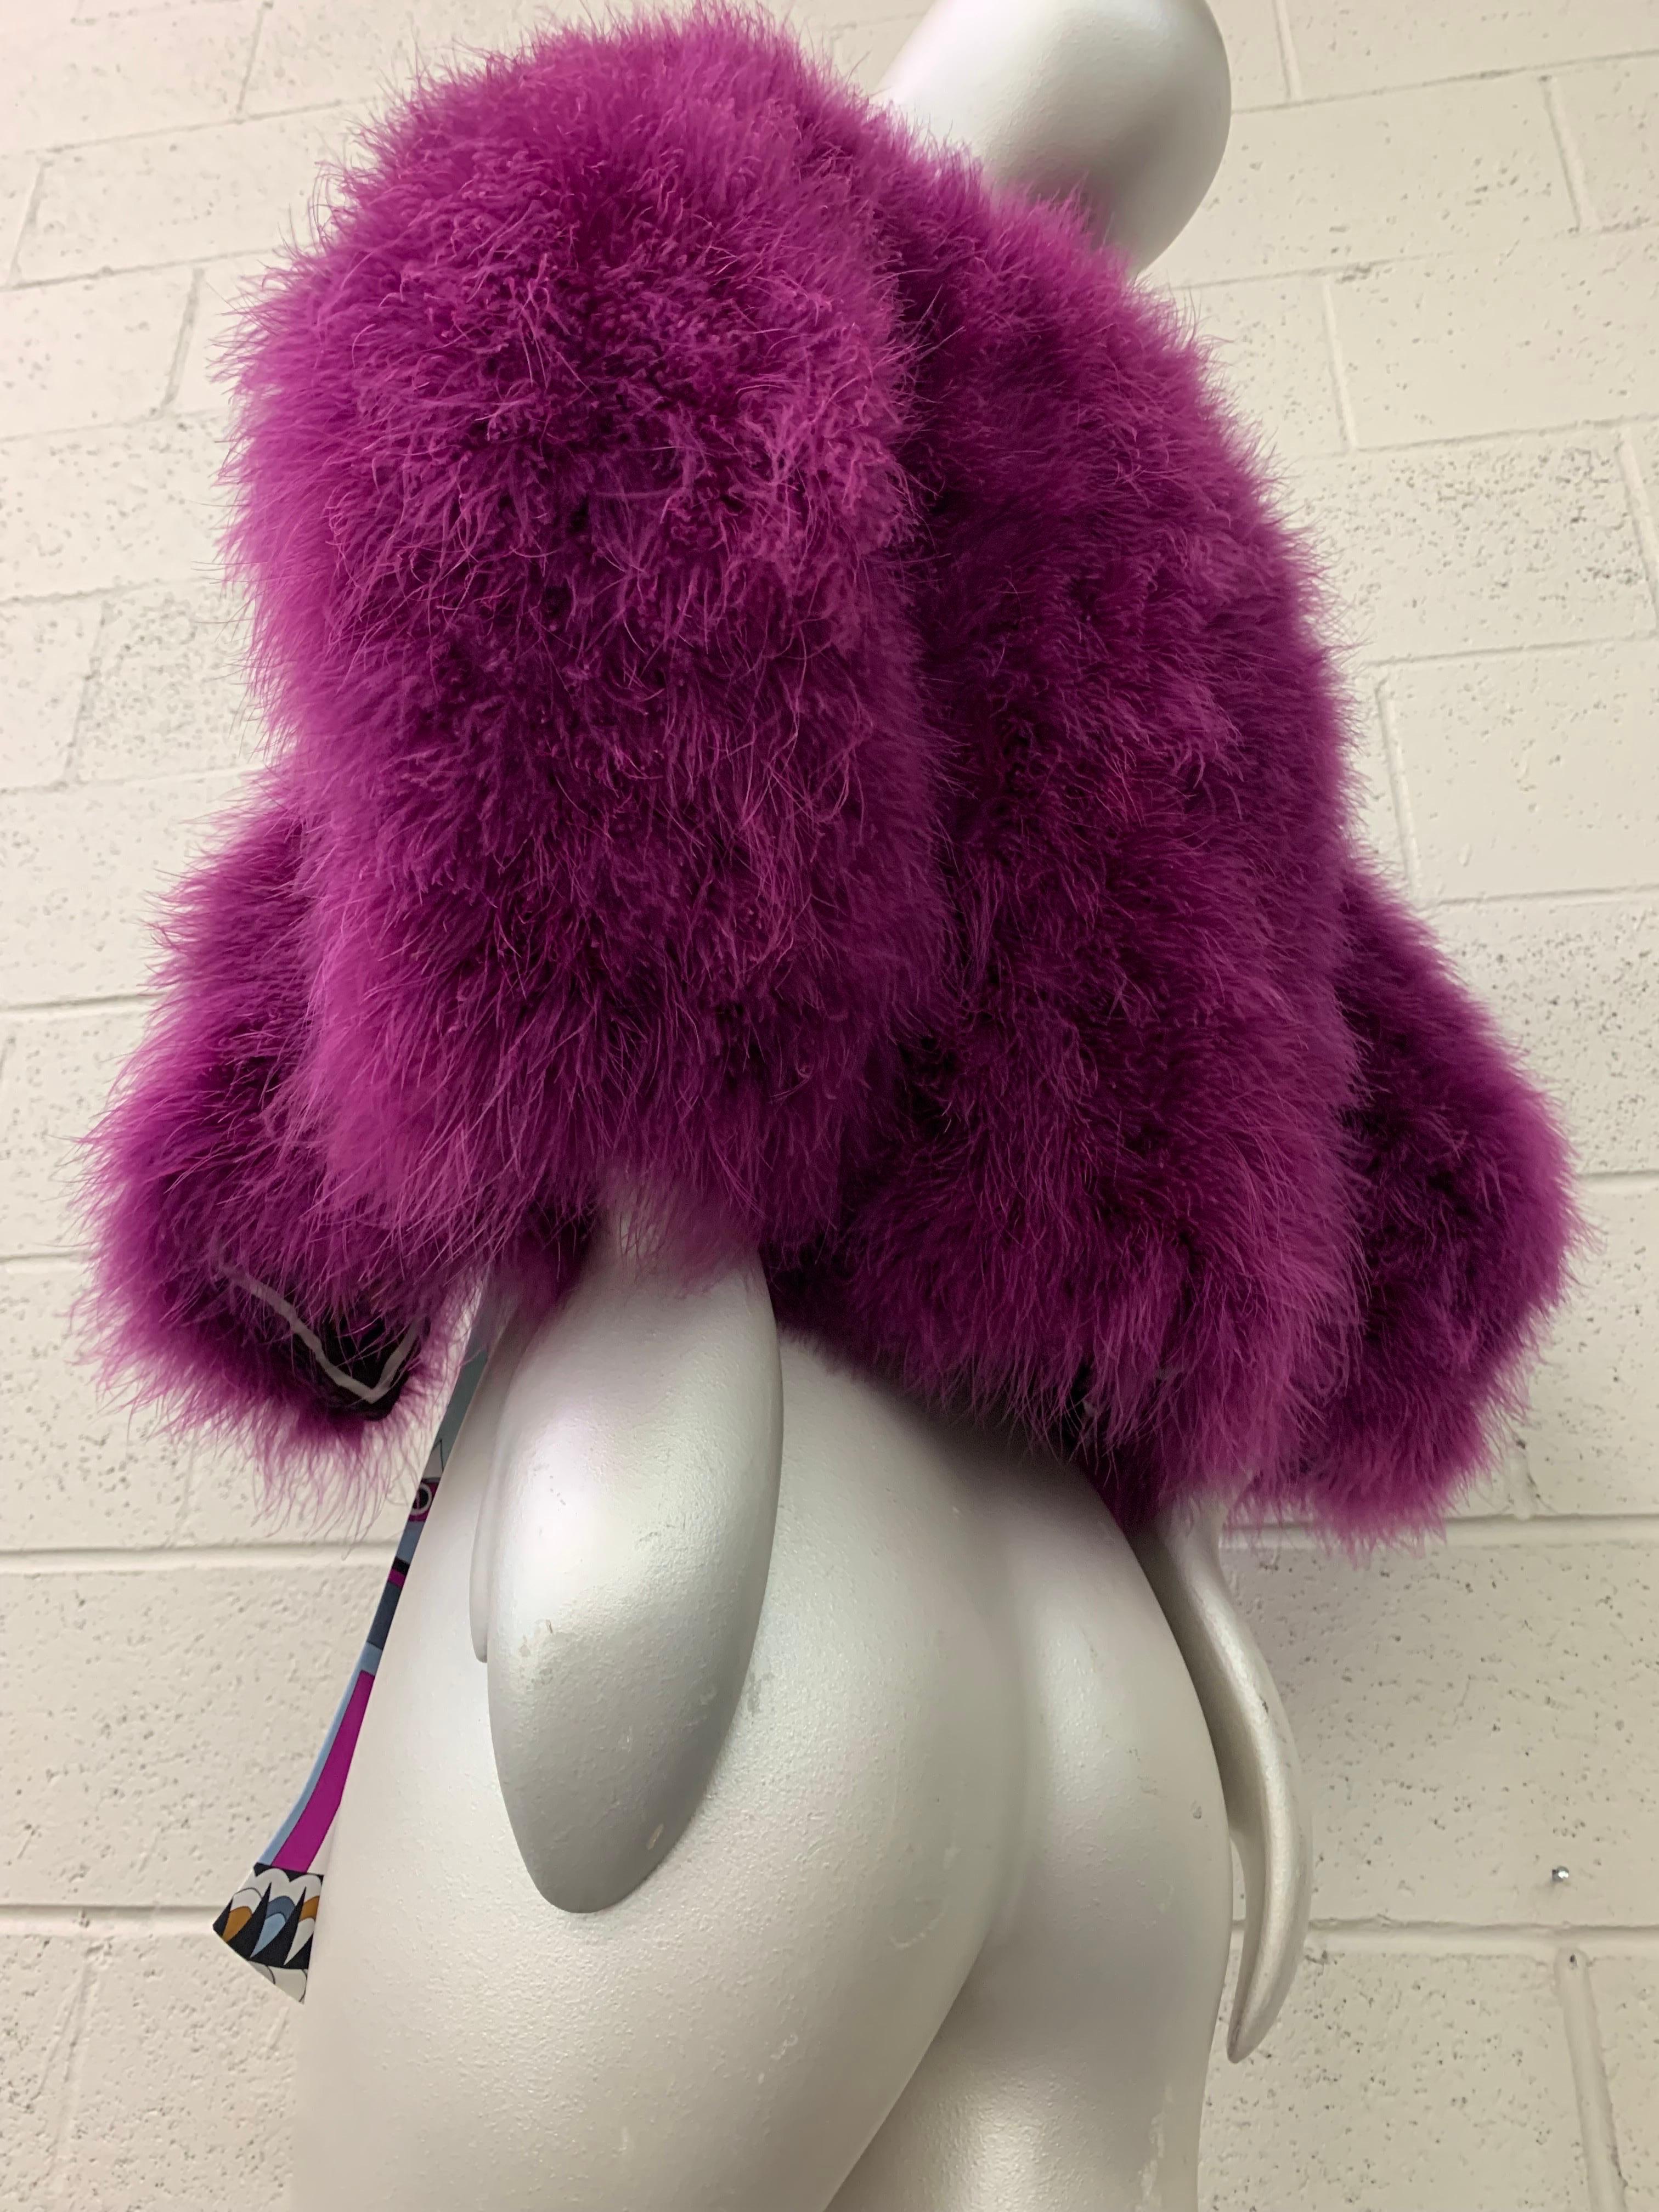 Purple Torso Creations Magenta Marabou Chubby Jacket w Pucci Scarf Tie at Neckline